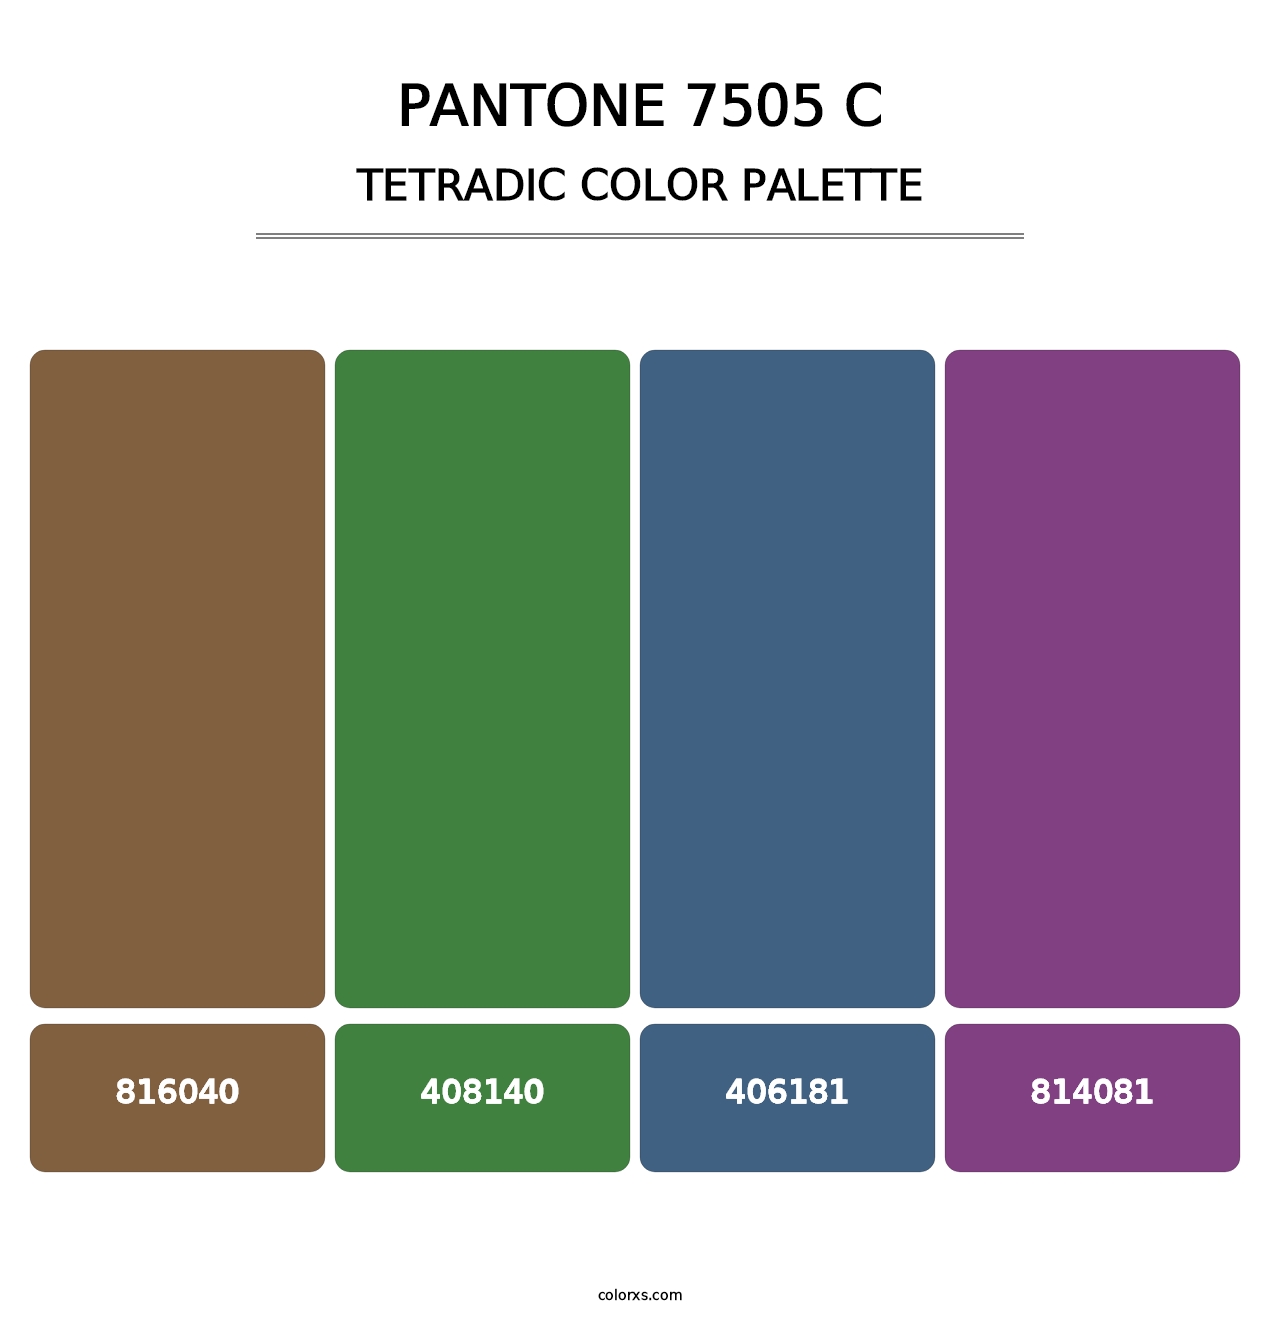 PANTONE 7505 C - Tetradic Color Palette